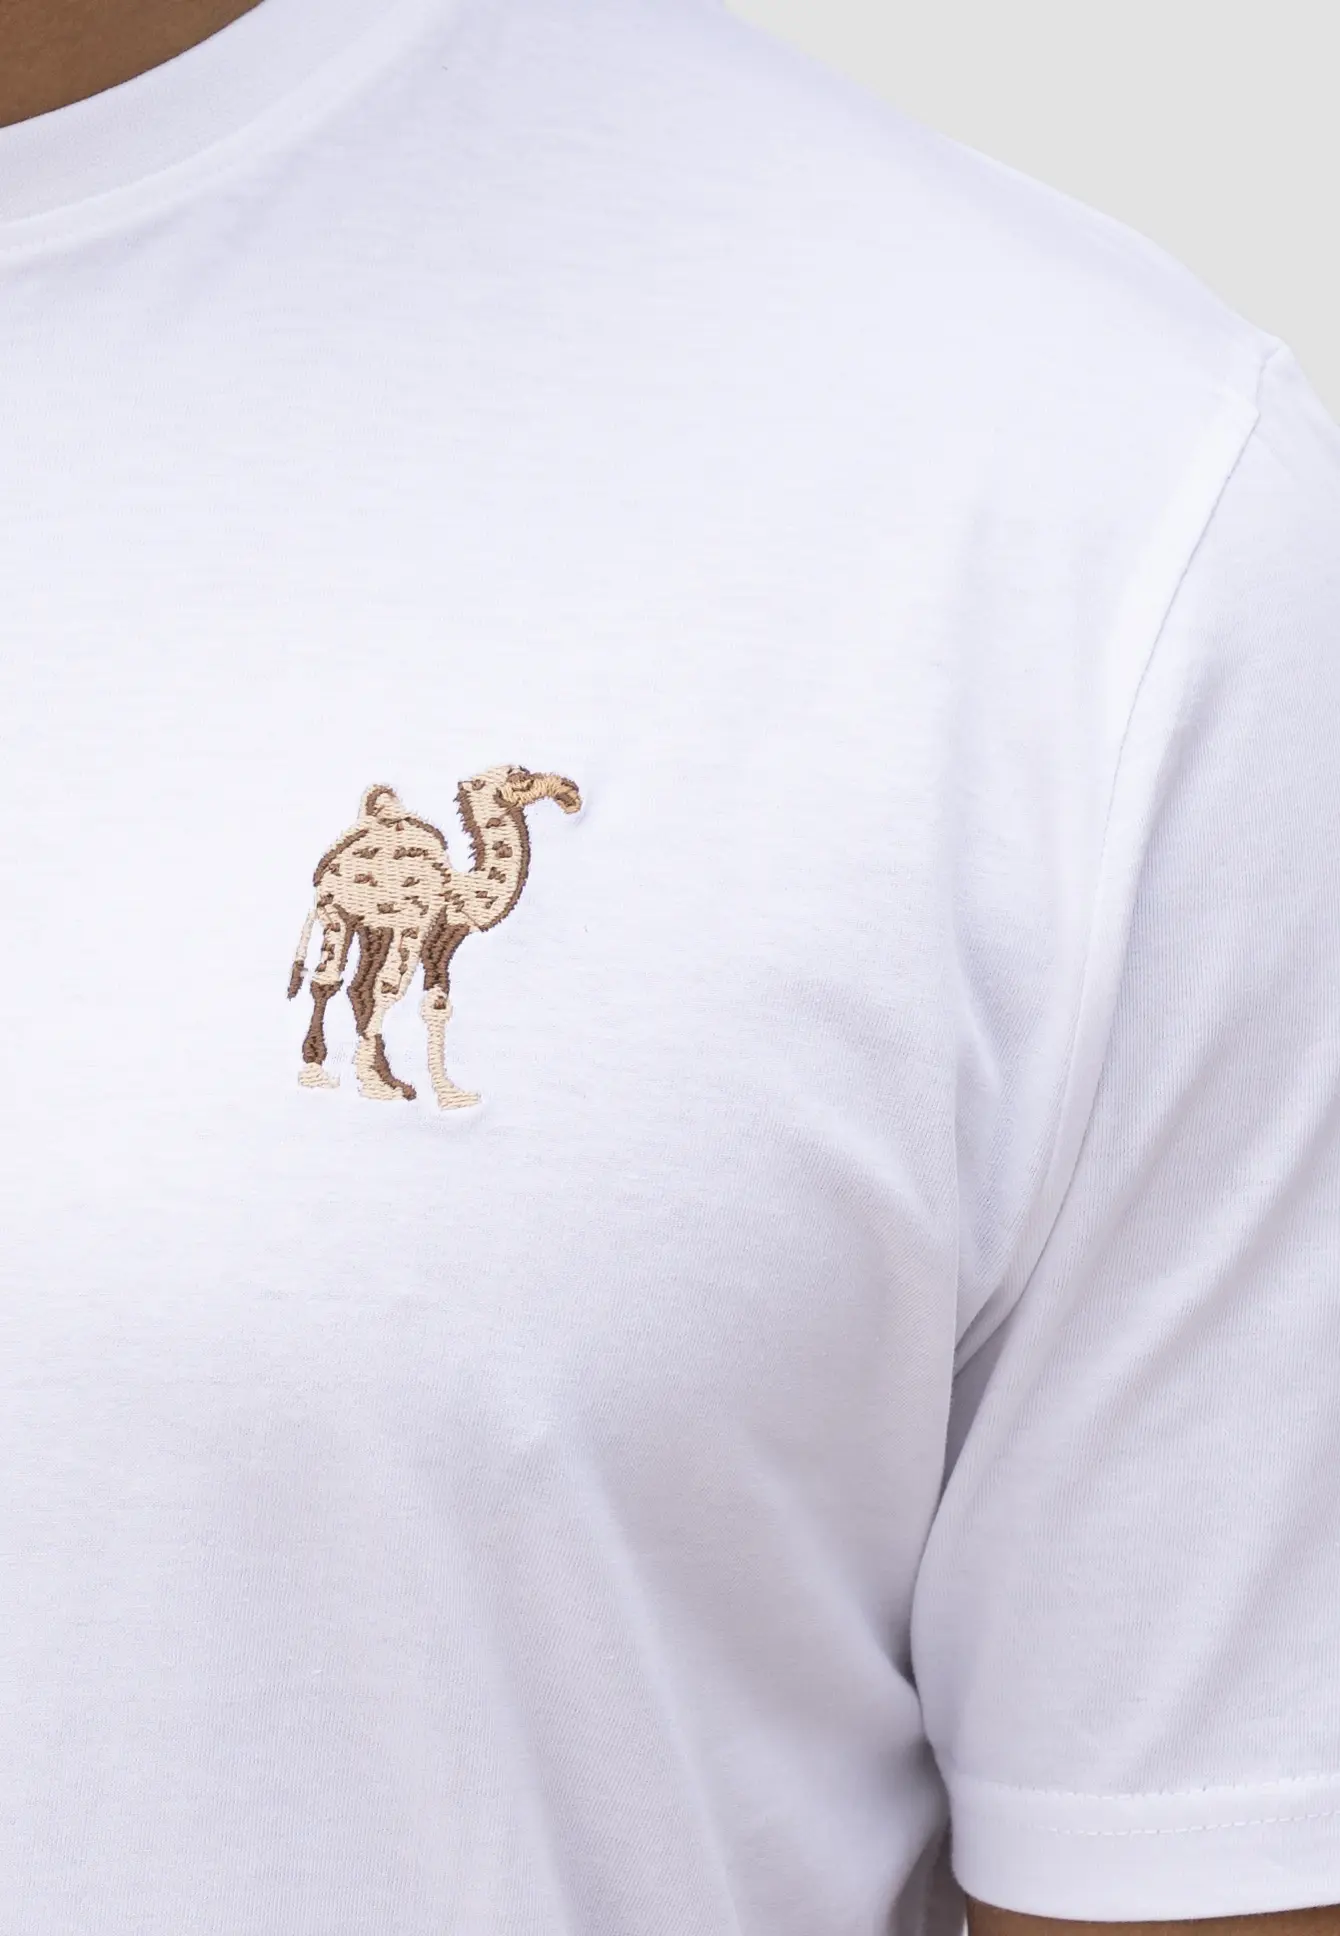 Camel Swim Trunks and T-shirt Bundle